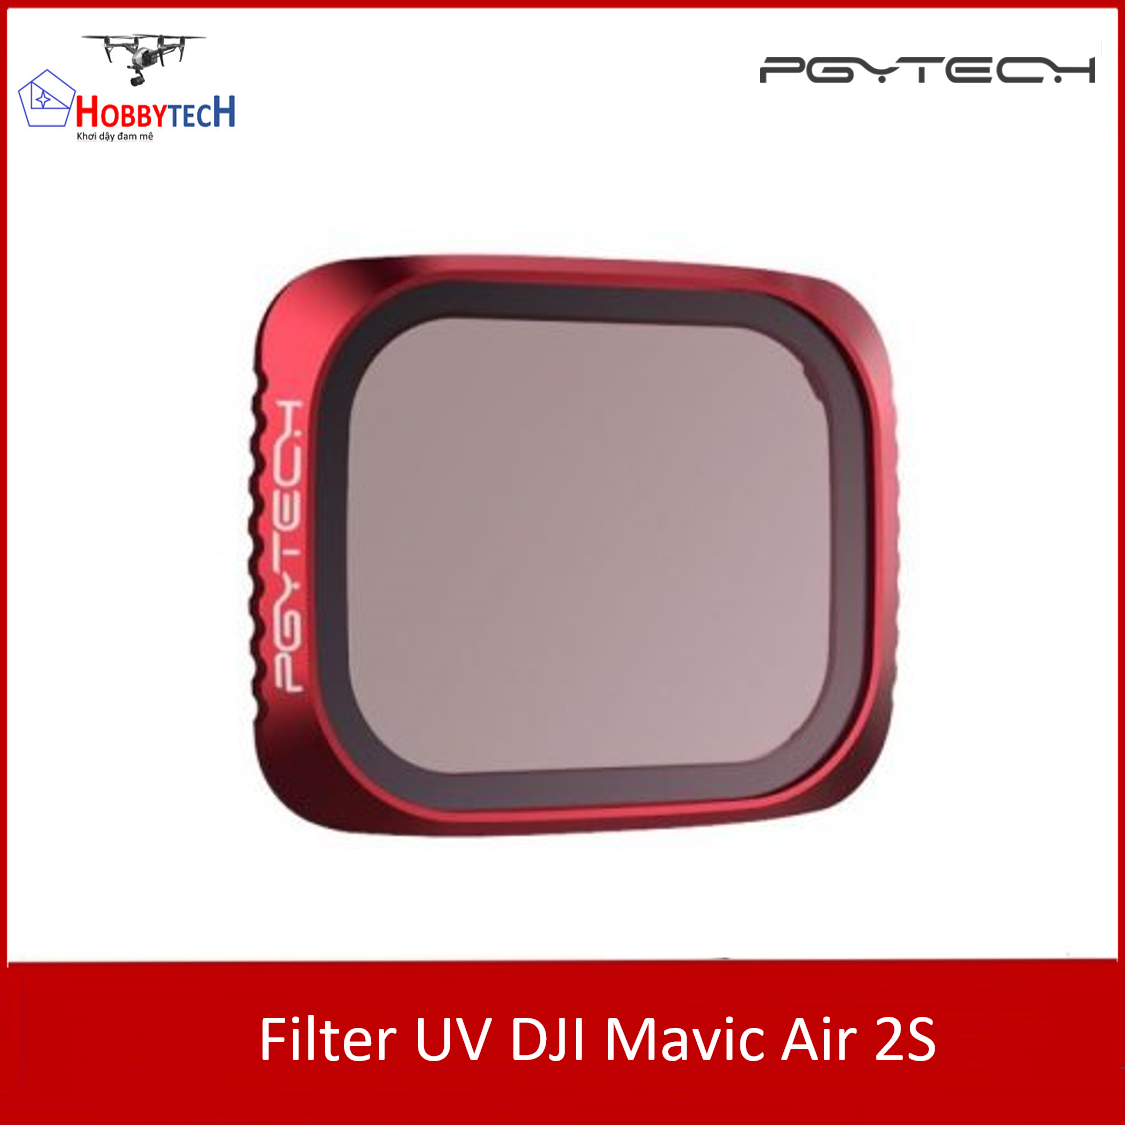 Filter UV DJI Mavic Air 2S – PGYtech